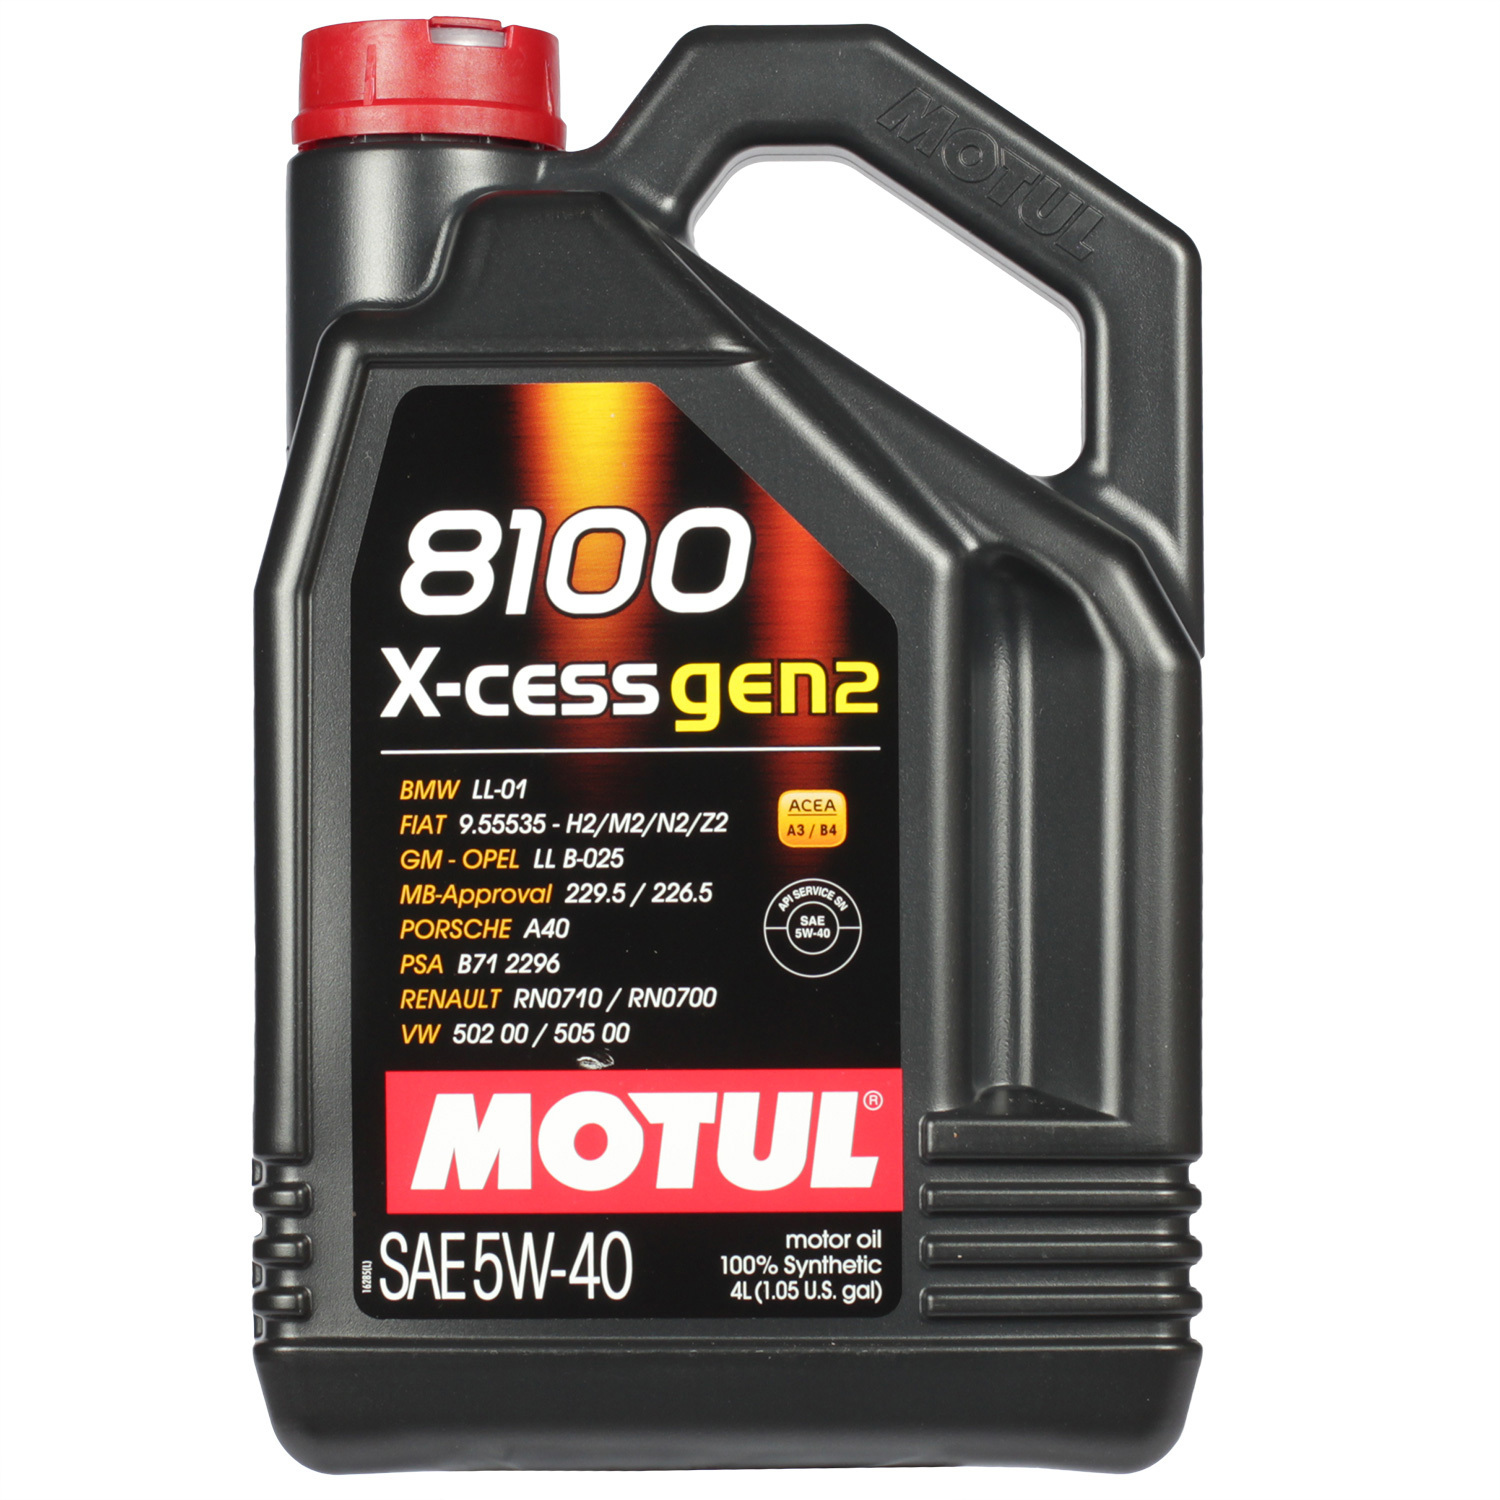 Motul Моторное масло Motul 8100 X-cess gen2 5W-40, 4 л масло моторное motul 106280